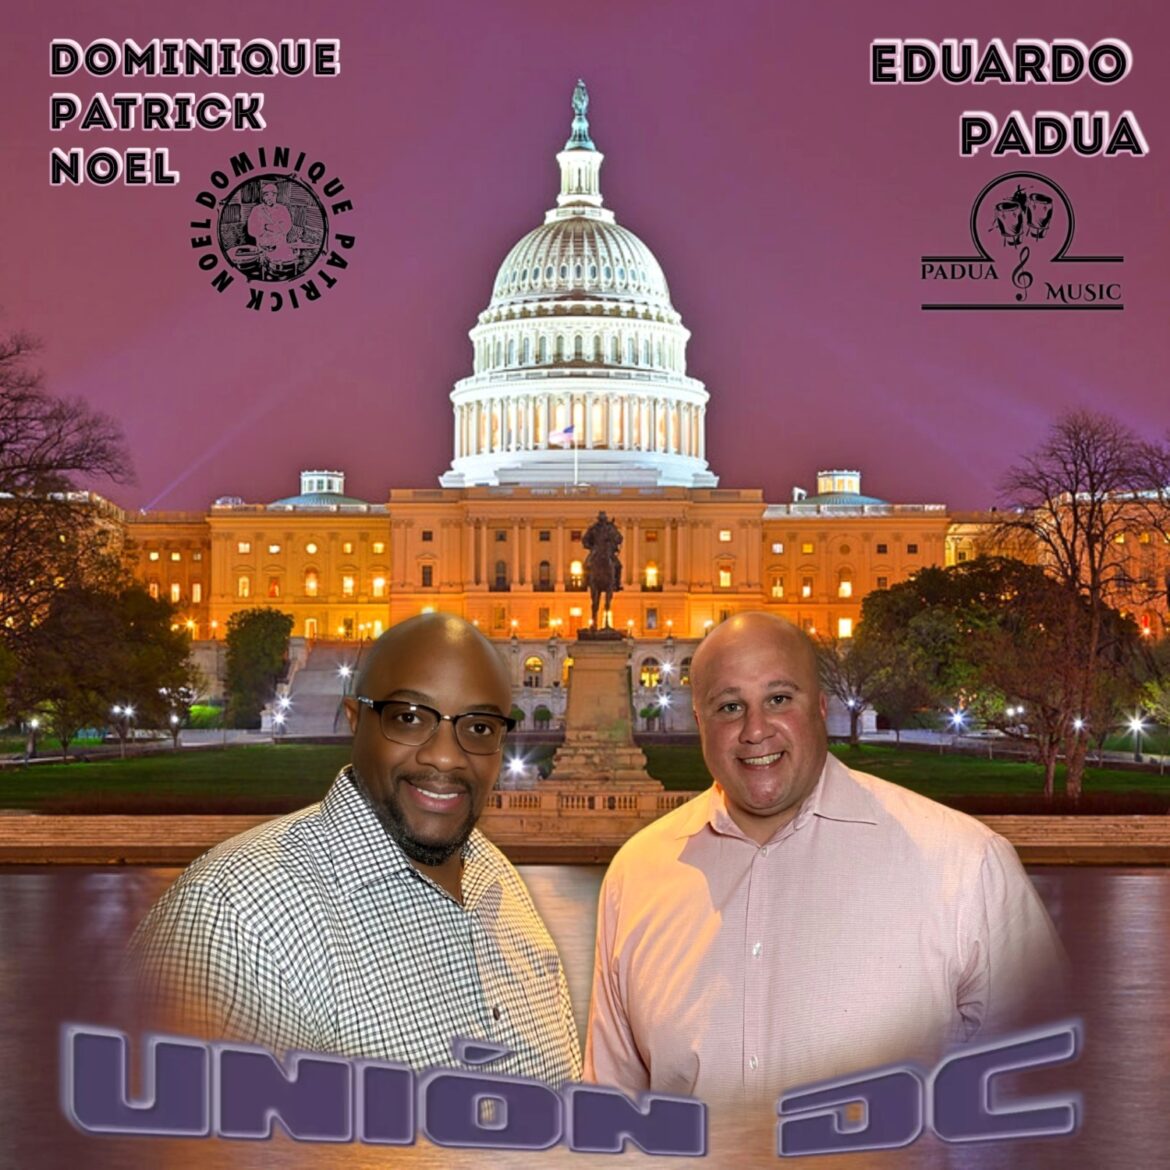 Eduardo Padua & Dominique Patrick Noel presentan “Unión DC”